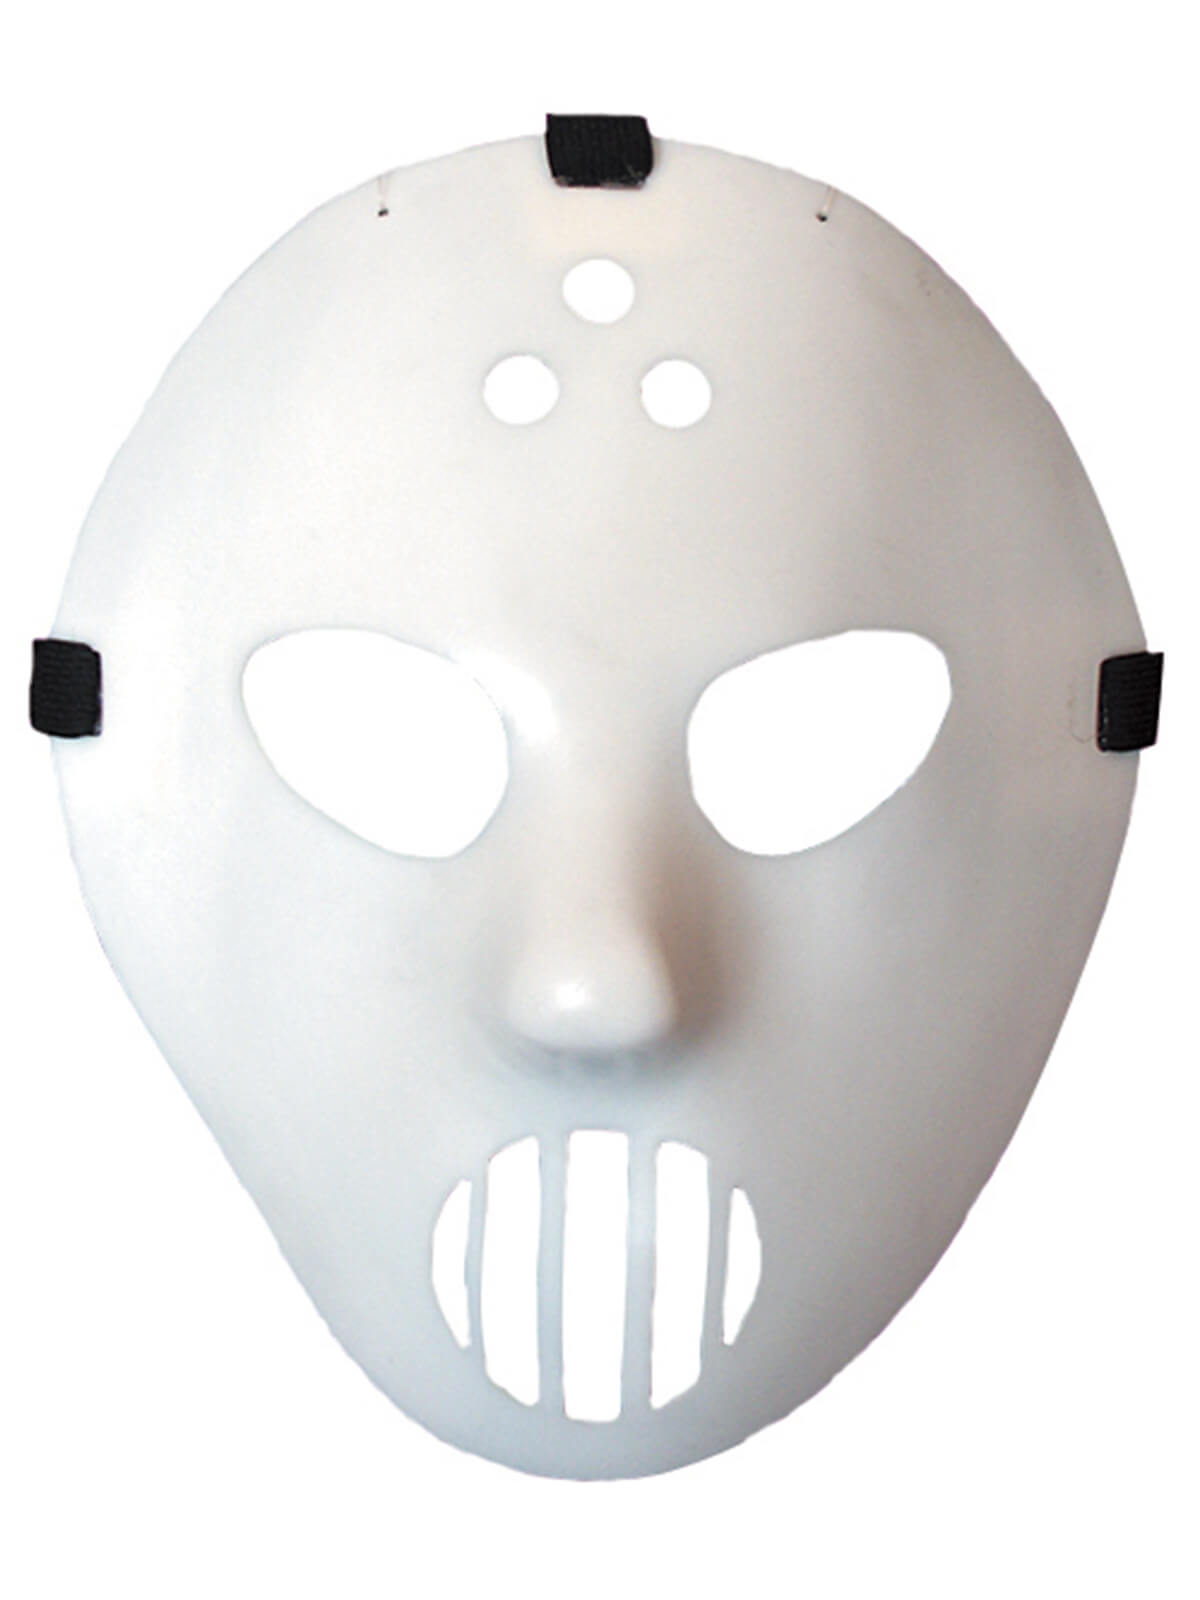 Goalie GID De Luxe Mask